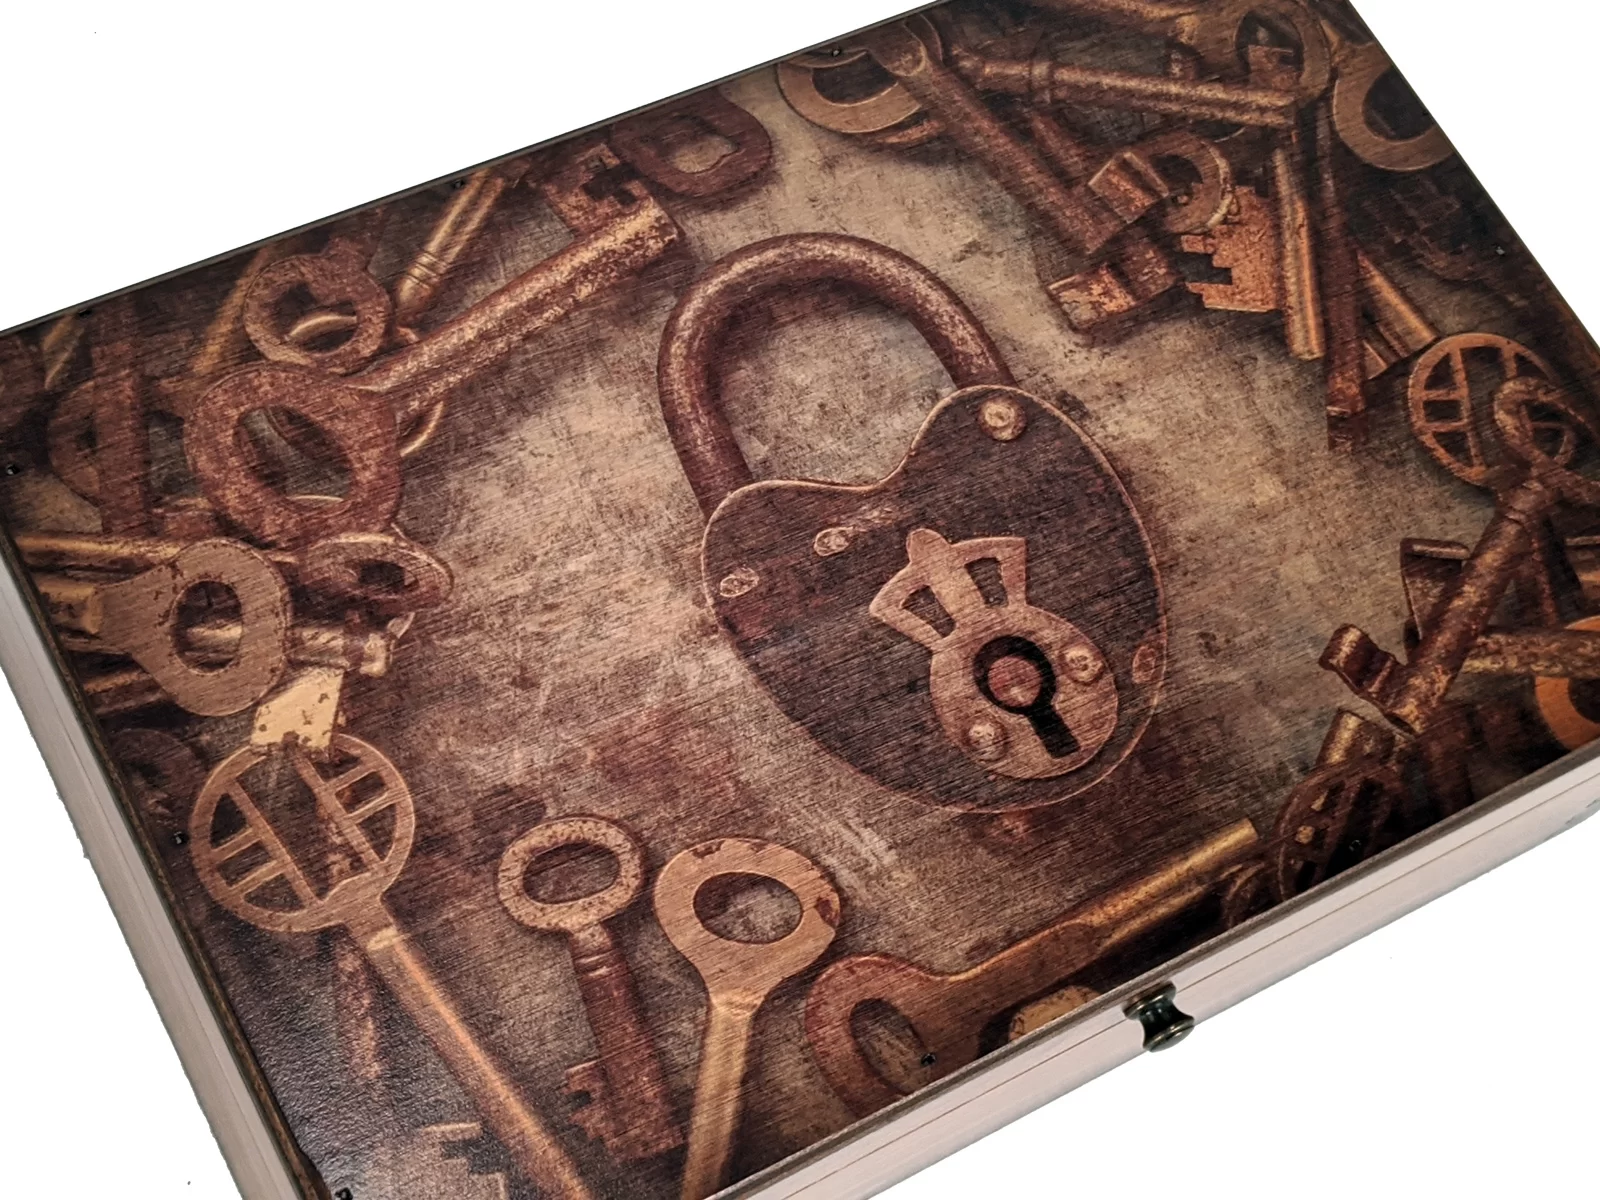 antique key and lock